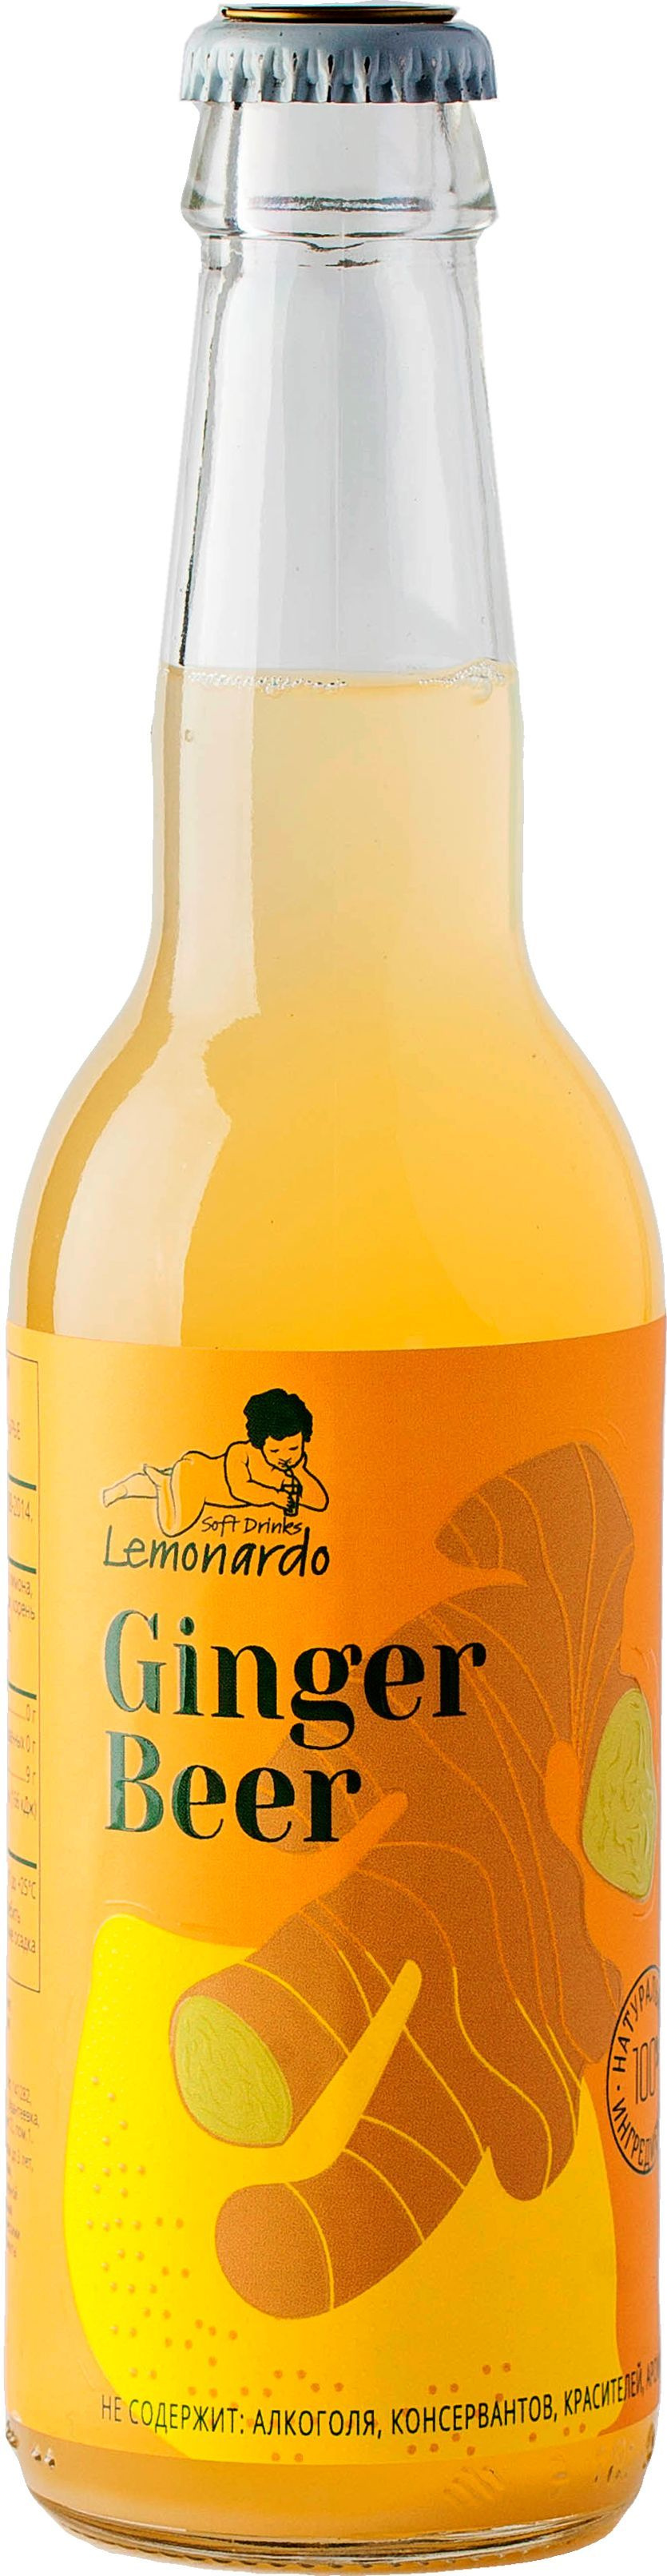 Имбирный лимонад без сахара/ Ginger Beer, 330мл.